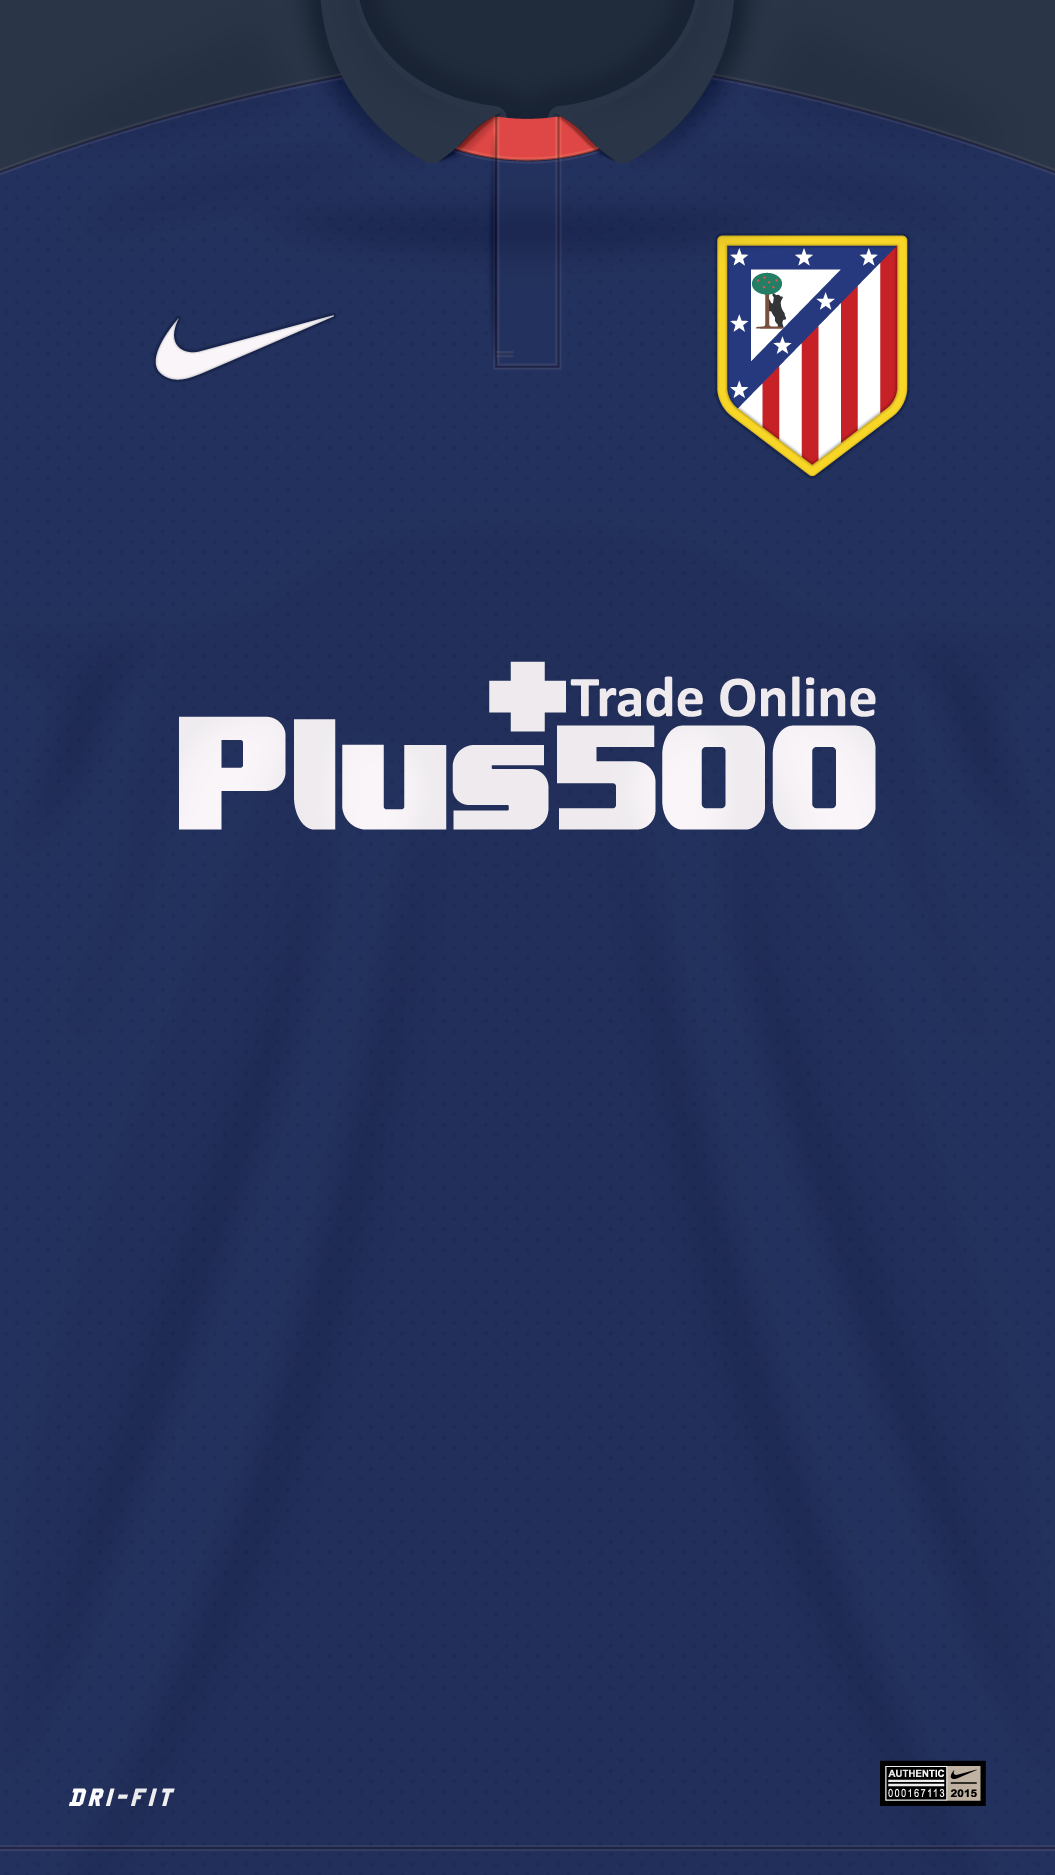 La Liga Kit Mobile Wallpapers Footy Headlines Afalchi Free images wallpape [afalchi.blogspot.com]